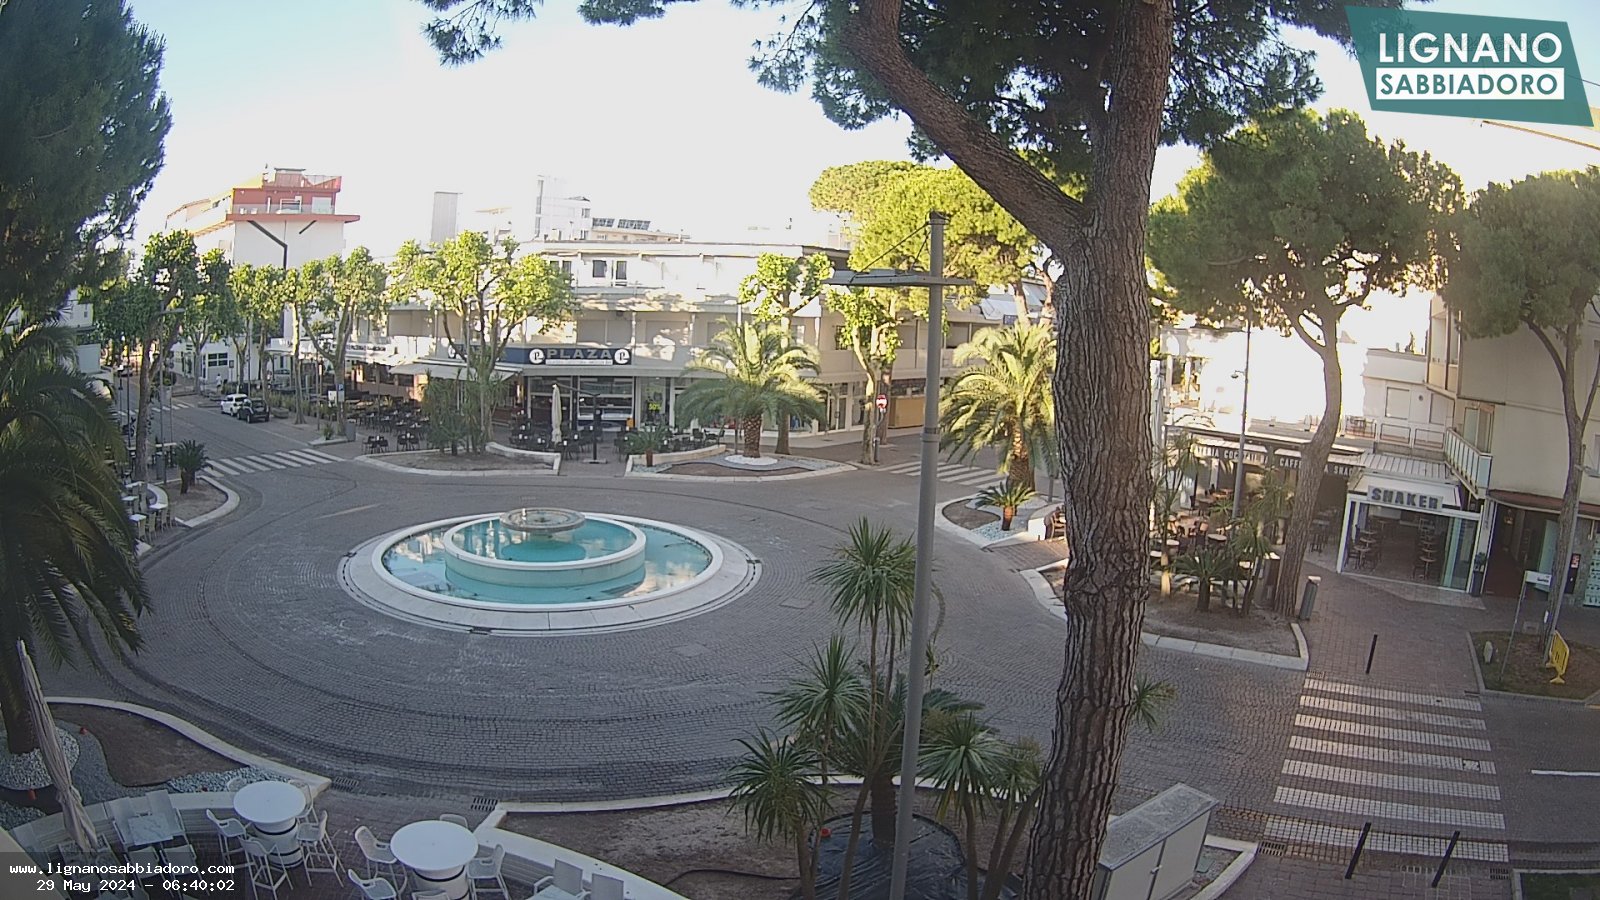 Webcam a Lignano Sabbiadoro con vista su piazza fontana e centro storico